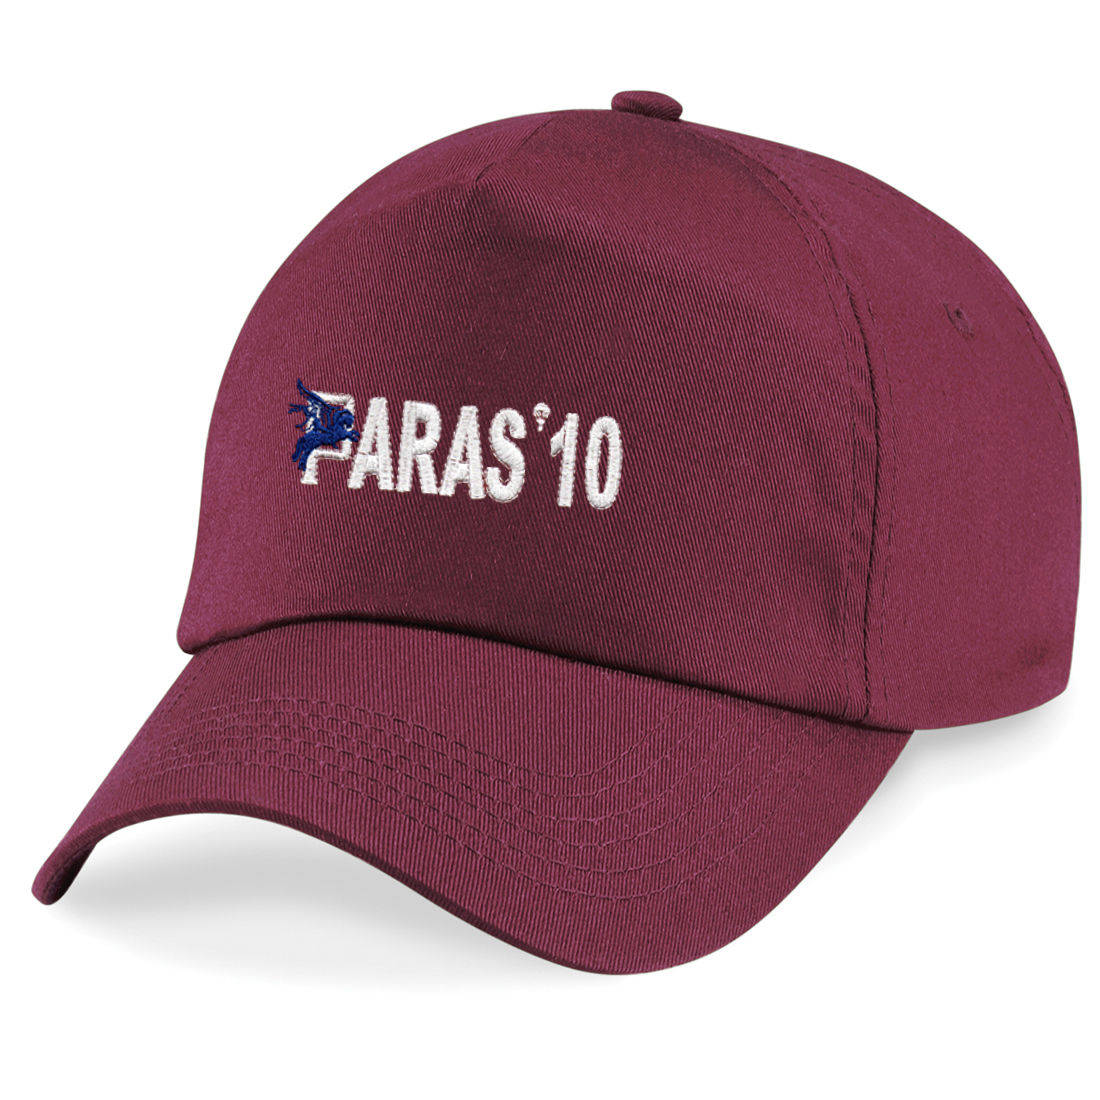 Baseball Cap - Maroon - Paras 10